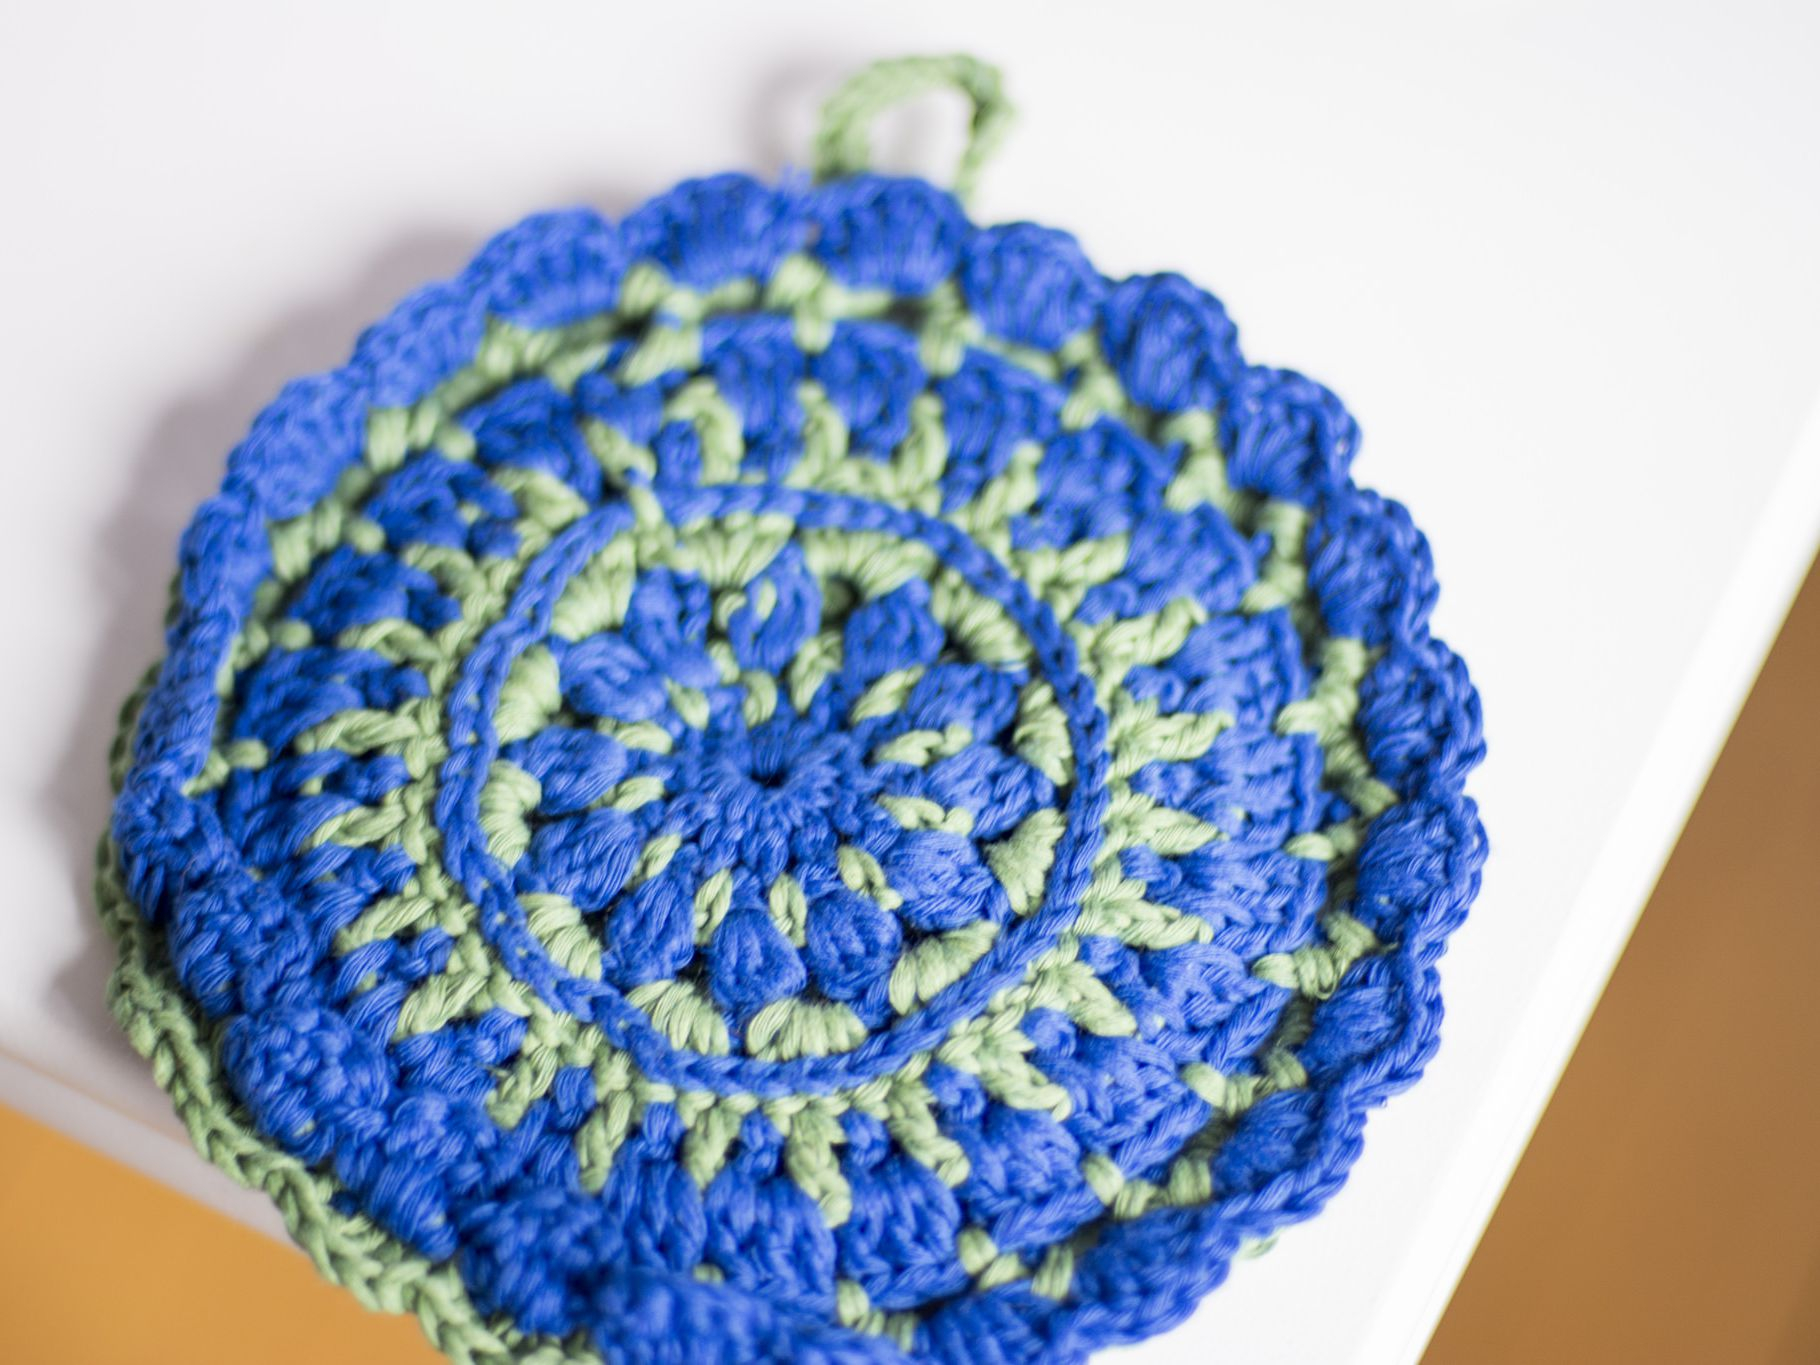 Vintage Crochet Potholders Free Patterns 7 Free Crochet Potholder Patterns